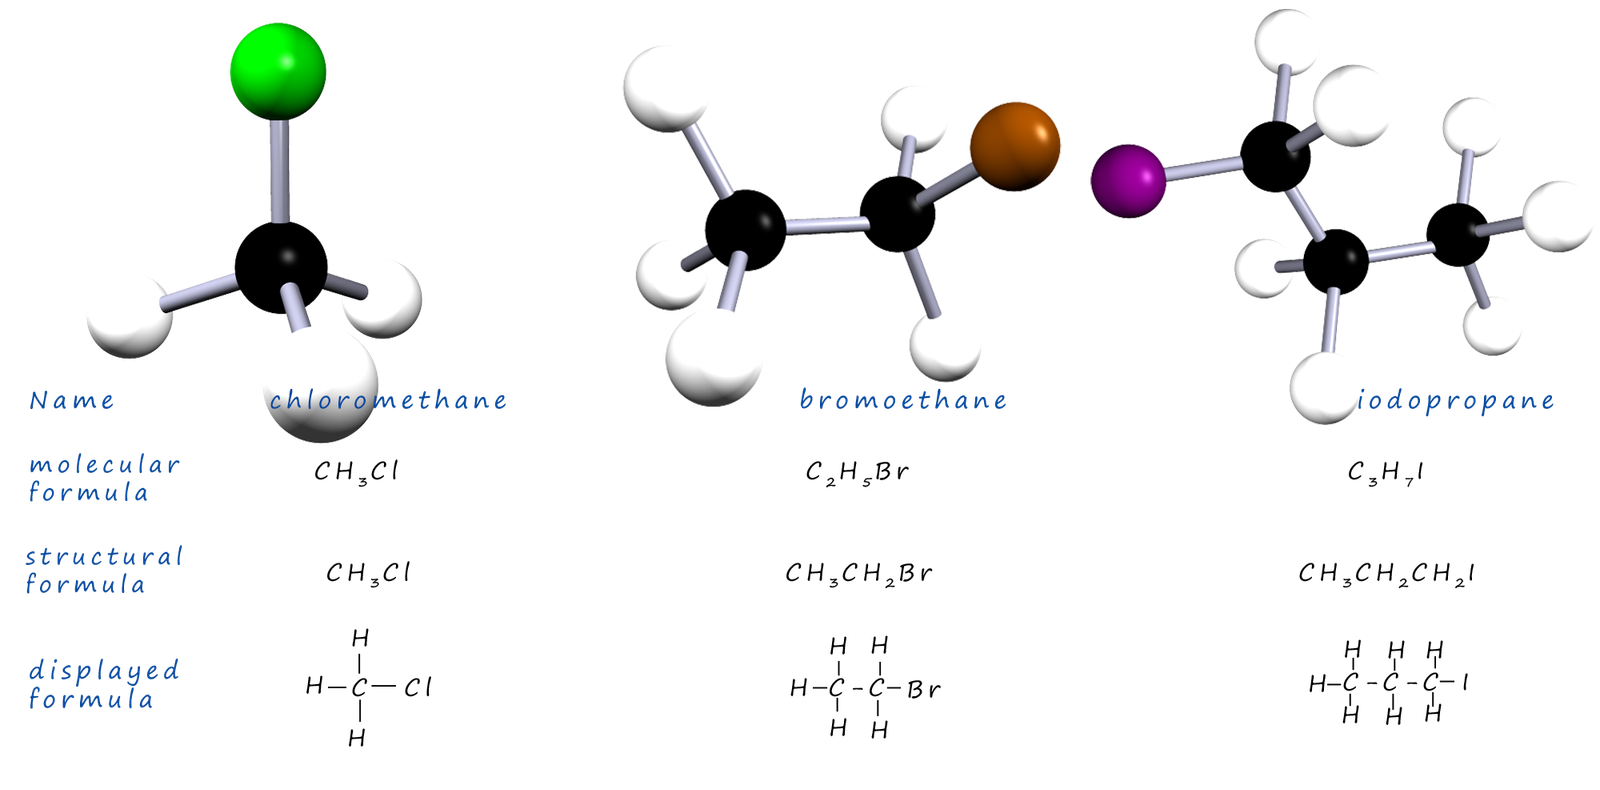 3d models, displayed formula and molecular formula for halogenalkane molecules chloromethane, bromoethane, iodopropane.